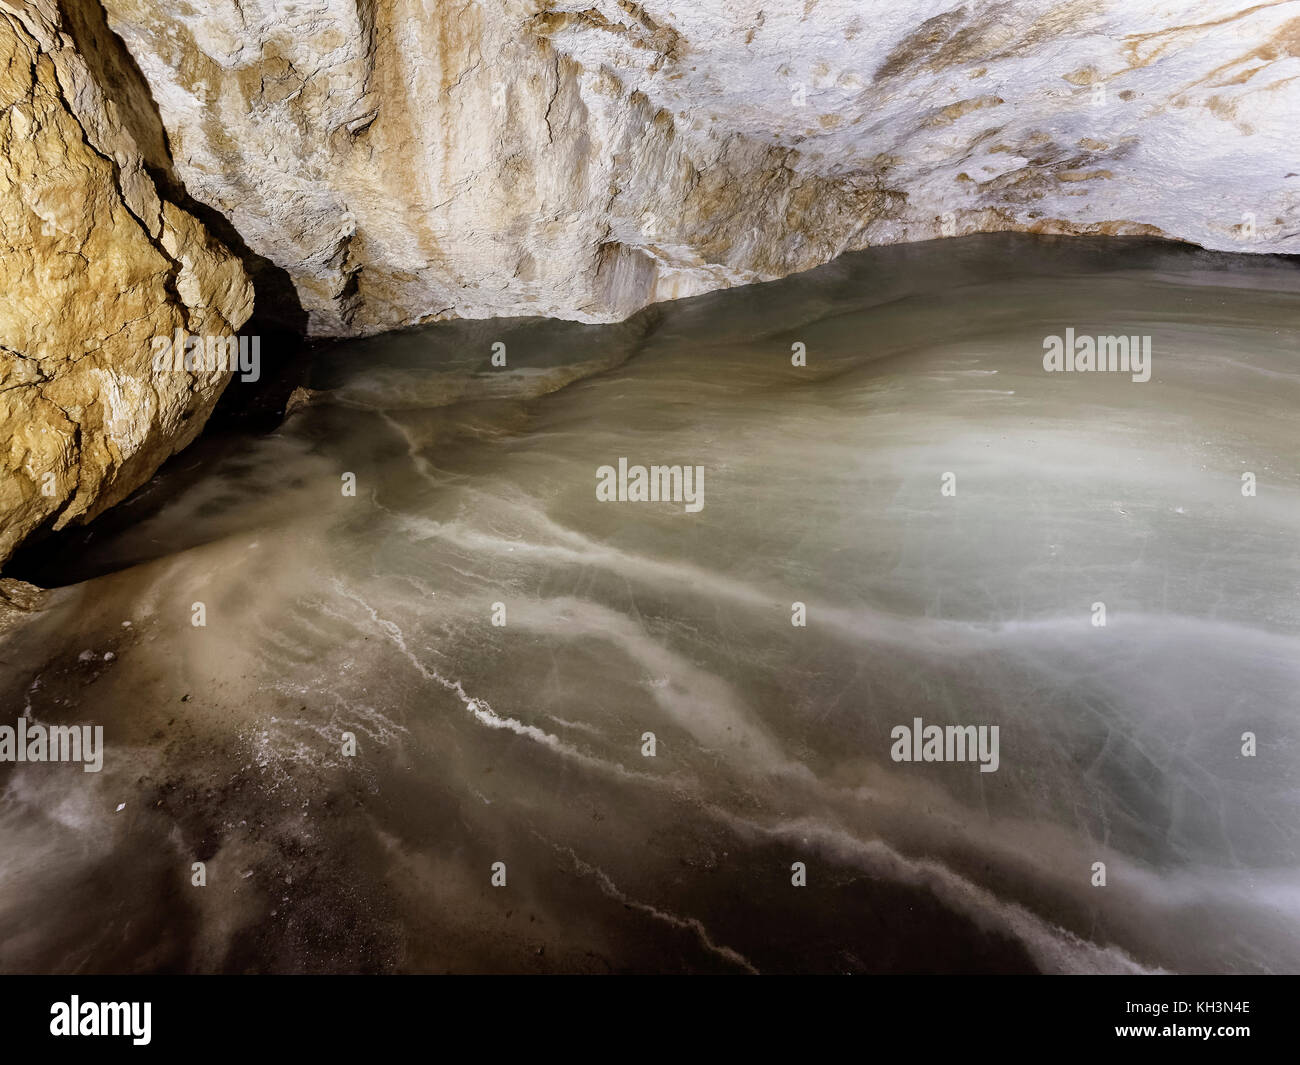 Dobsina grotta di ghiaccio, Dobsinska ľadova jaskyna iin Parco Nazionale Paradiso Slovacco, Kosicky kraj, Slovacchia, Europa, patrimonio mondiale dell'UNESCO Foto Stock